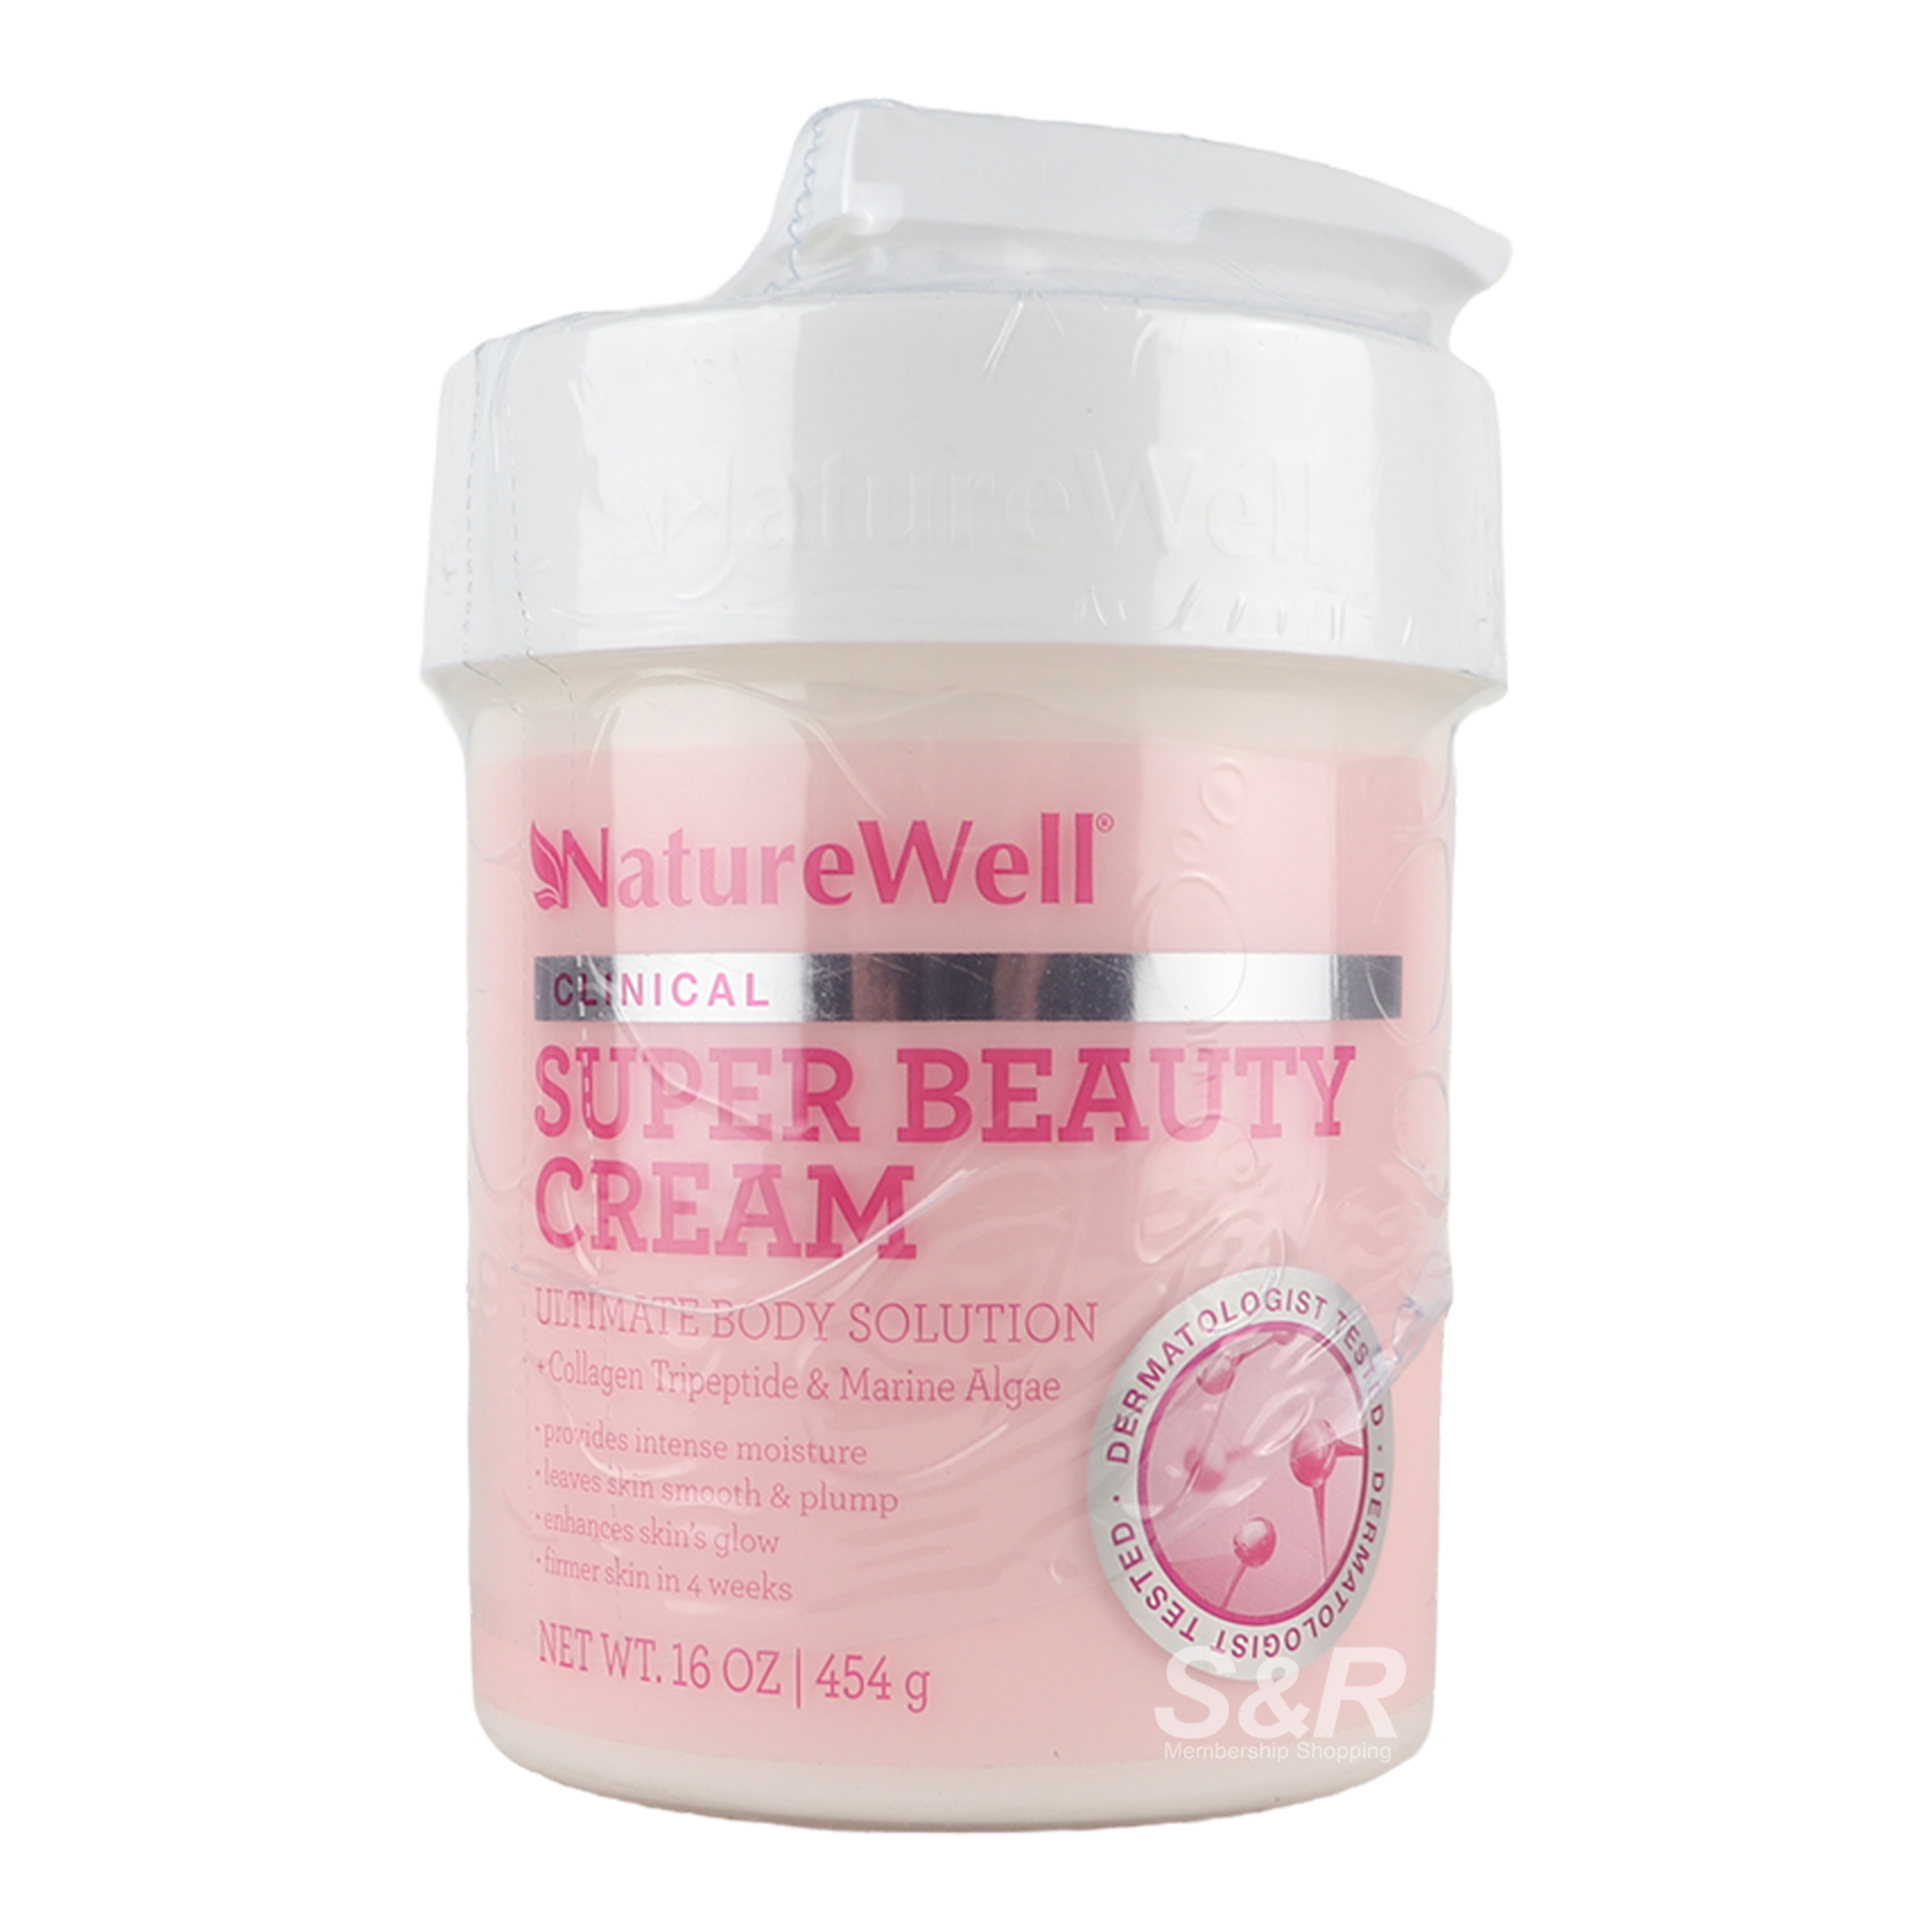 NatureWell Super Beauty Cream 454g